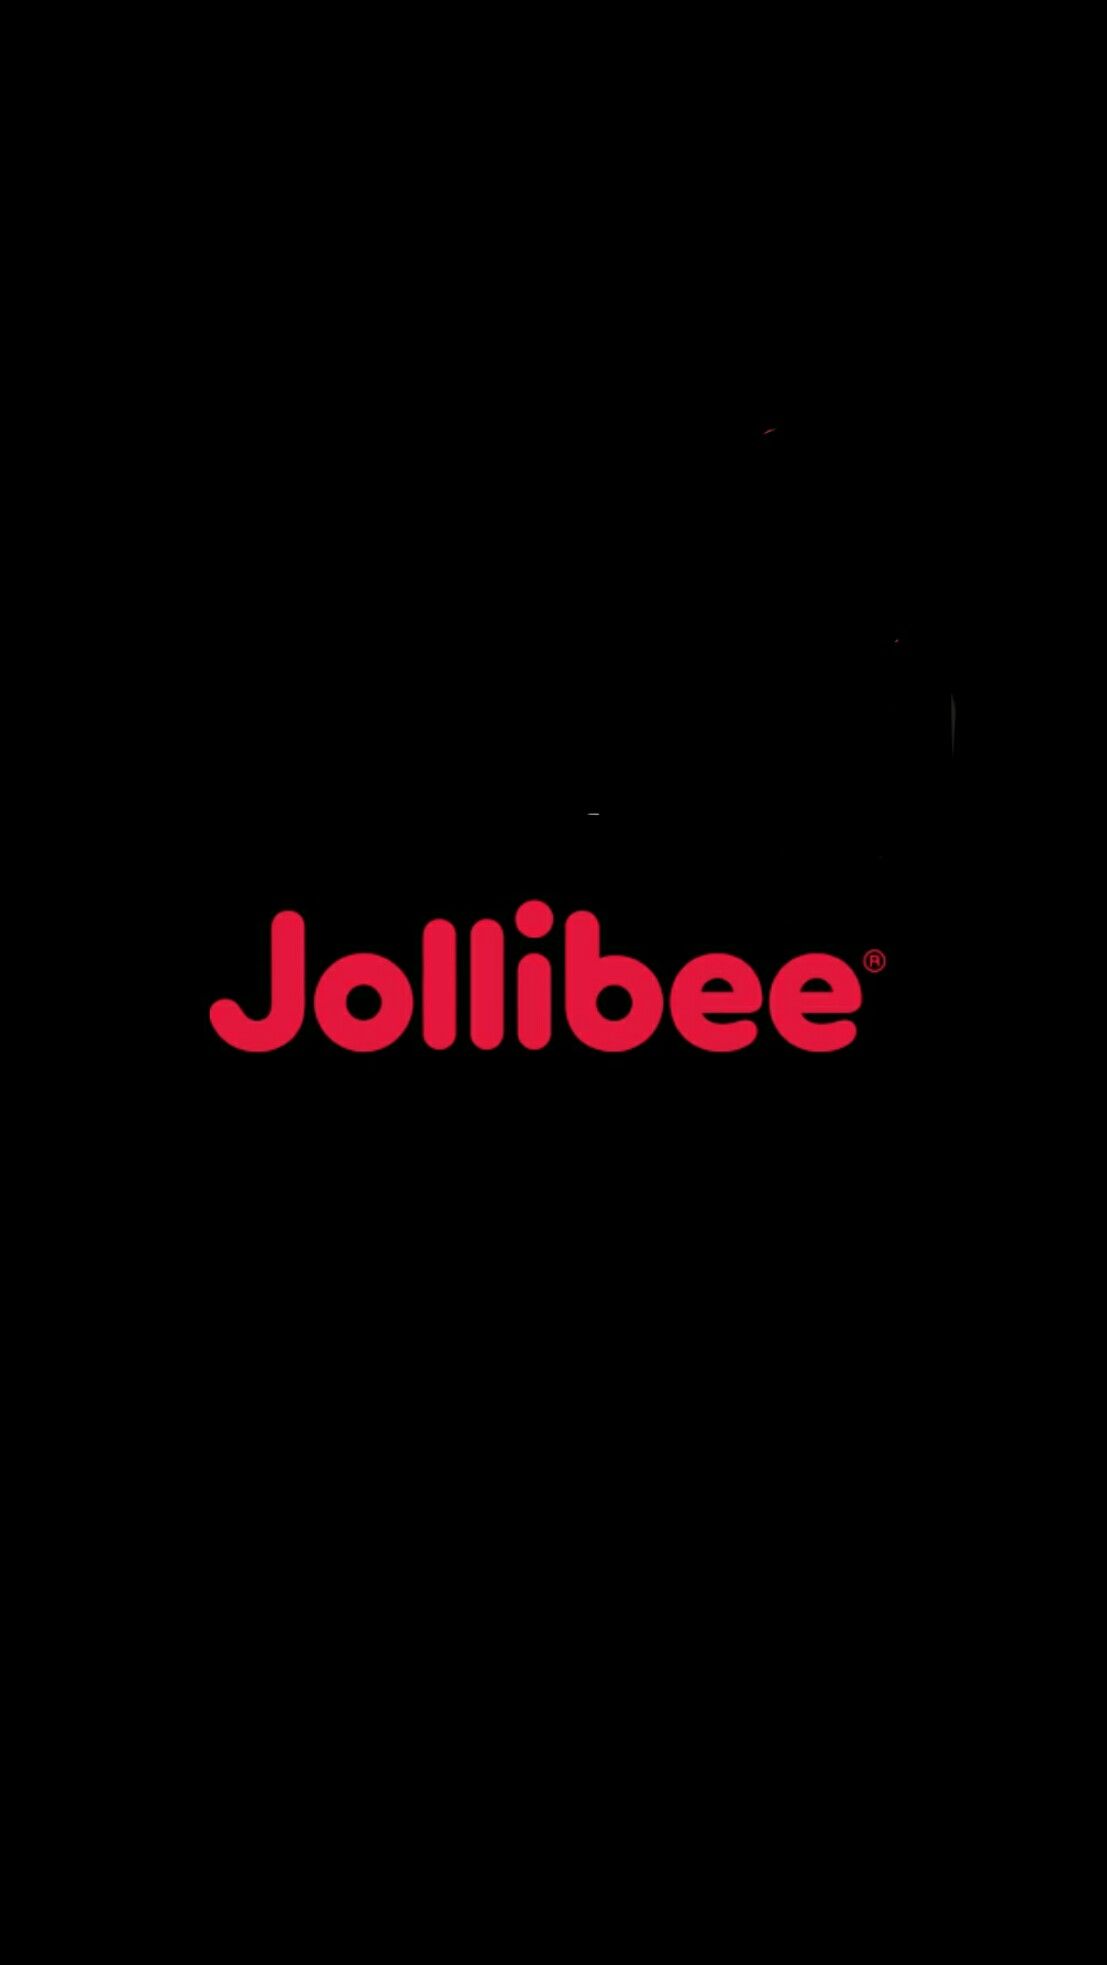 Jollibee Wallpaper Free Jollibee .wallpaperaccess.com